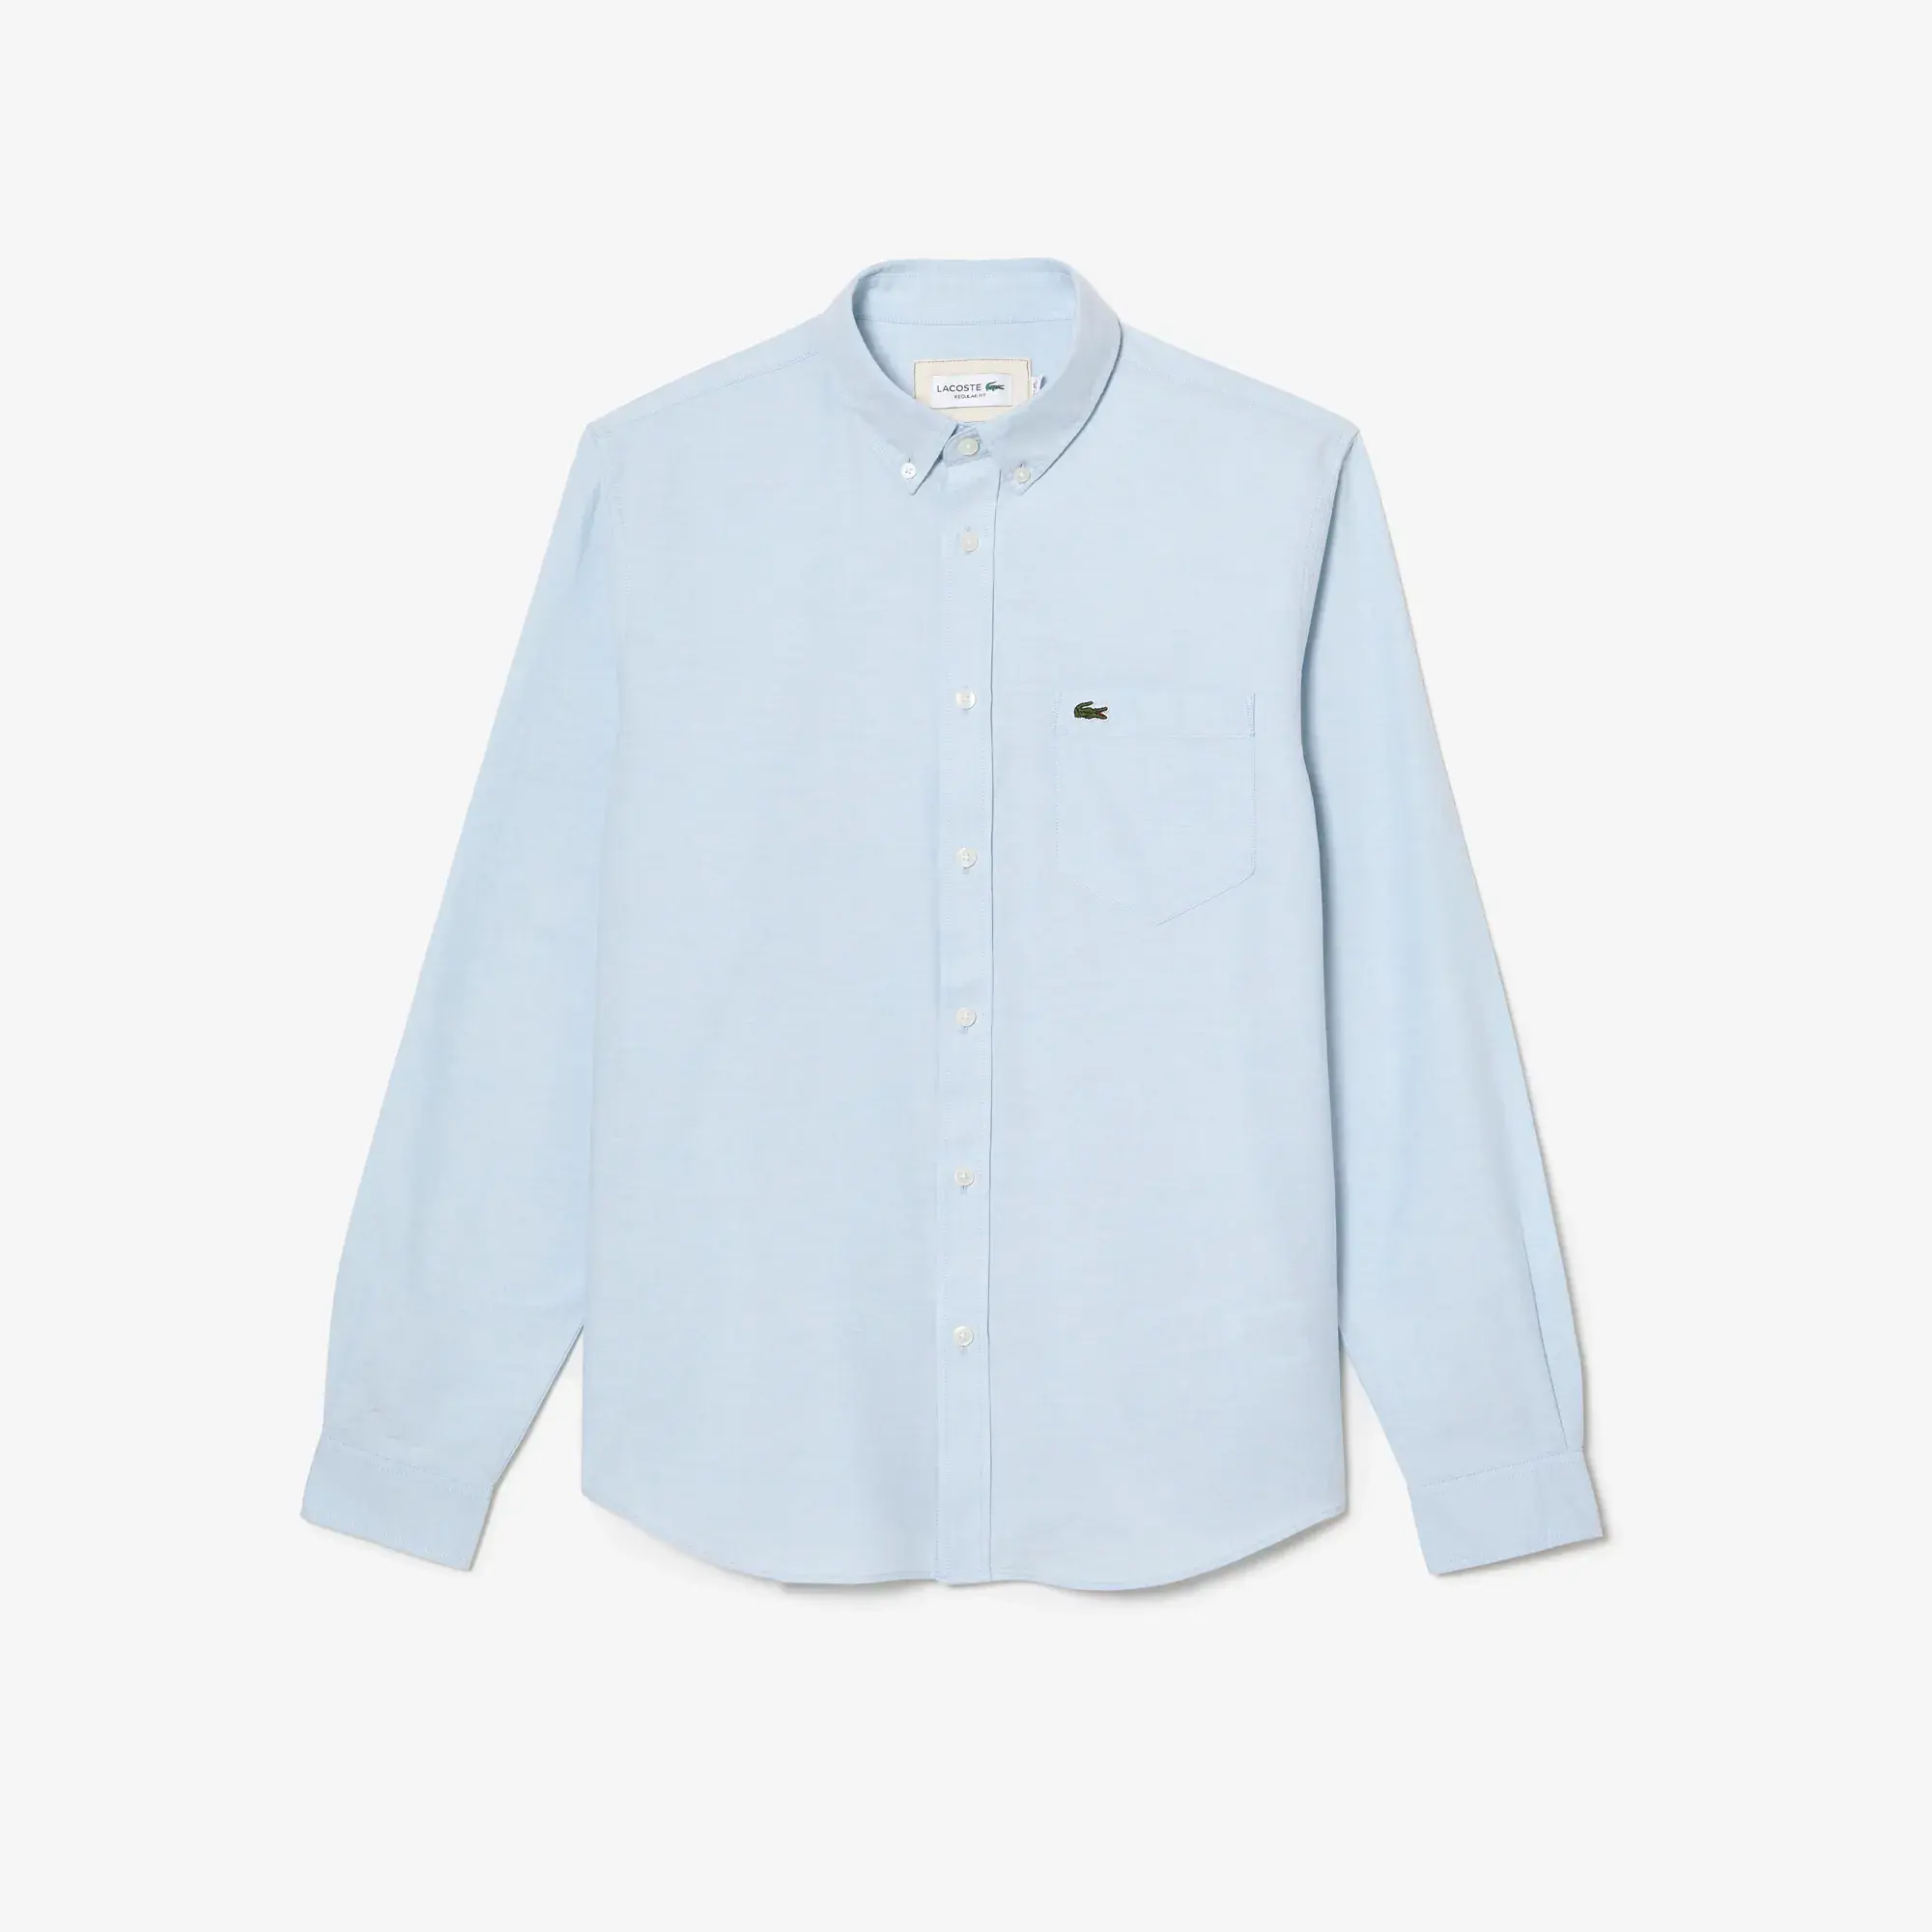 Lacoste Men’s Buttoned Collar Oxford Cotton Shirt. 2